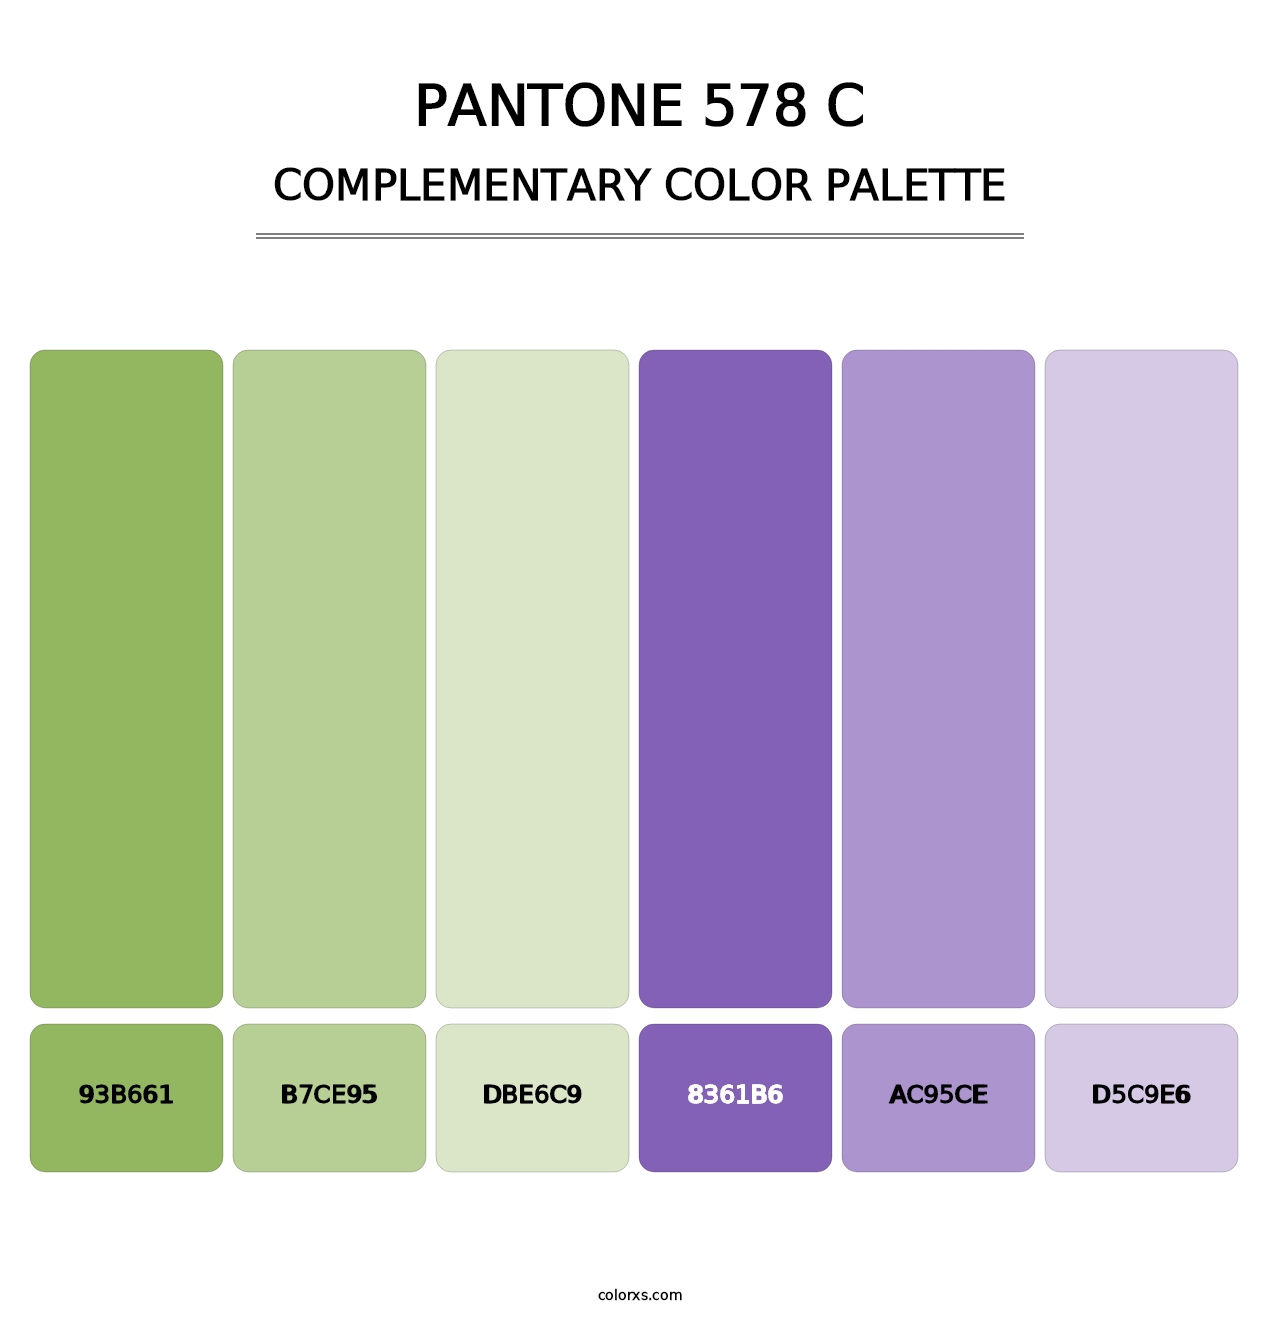 PANTONE 578 C - Complementary Color Palette